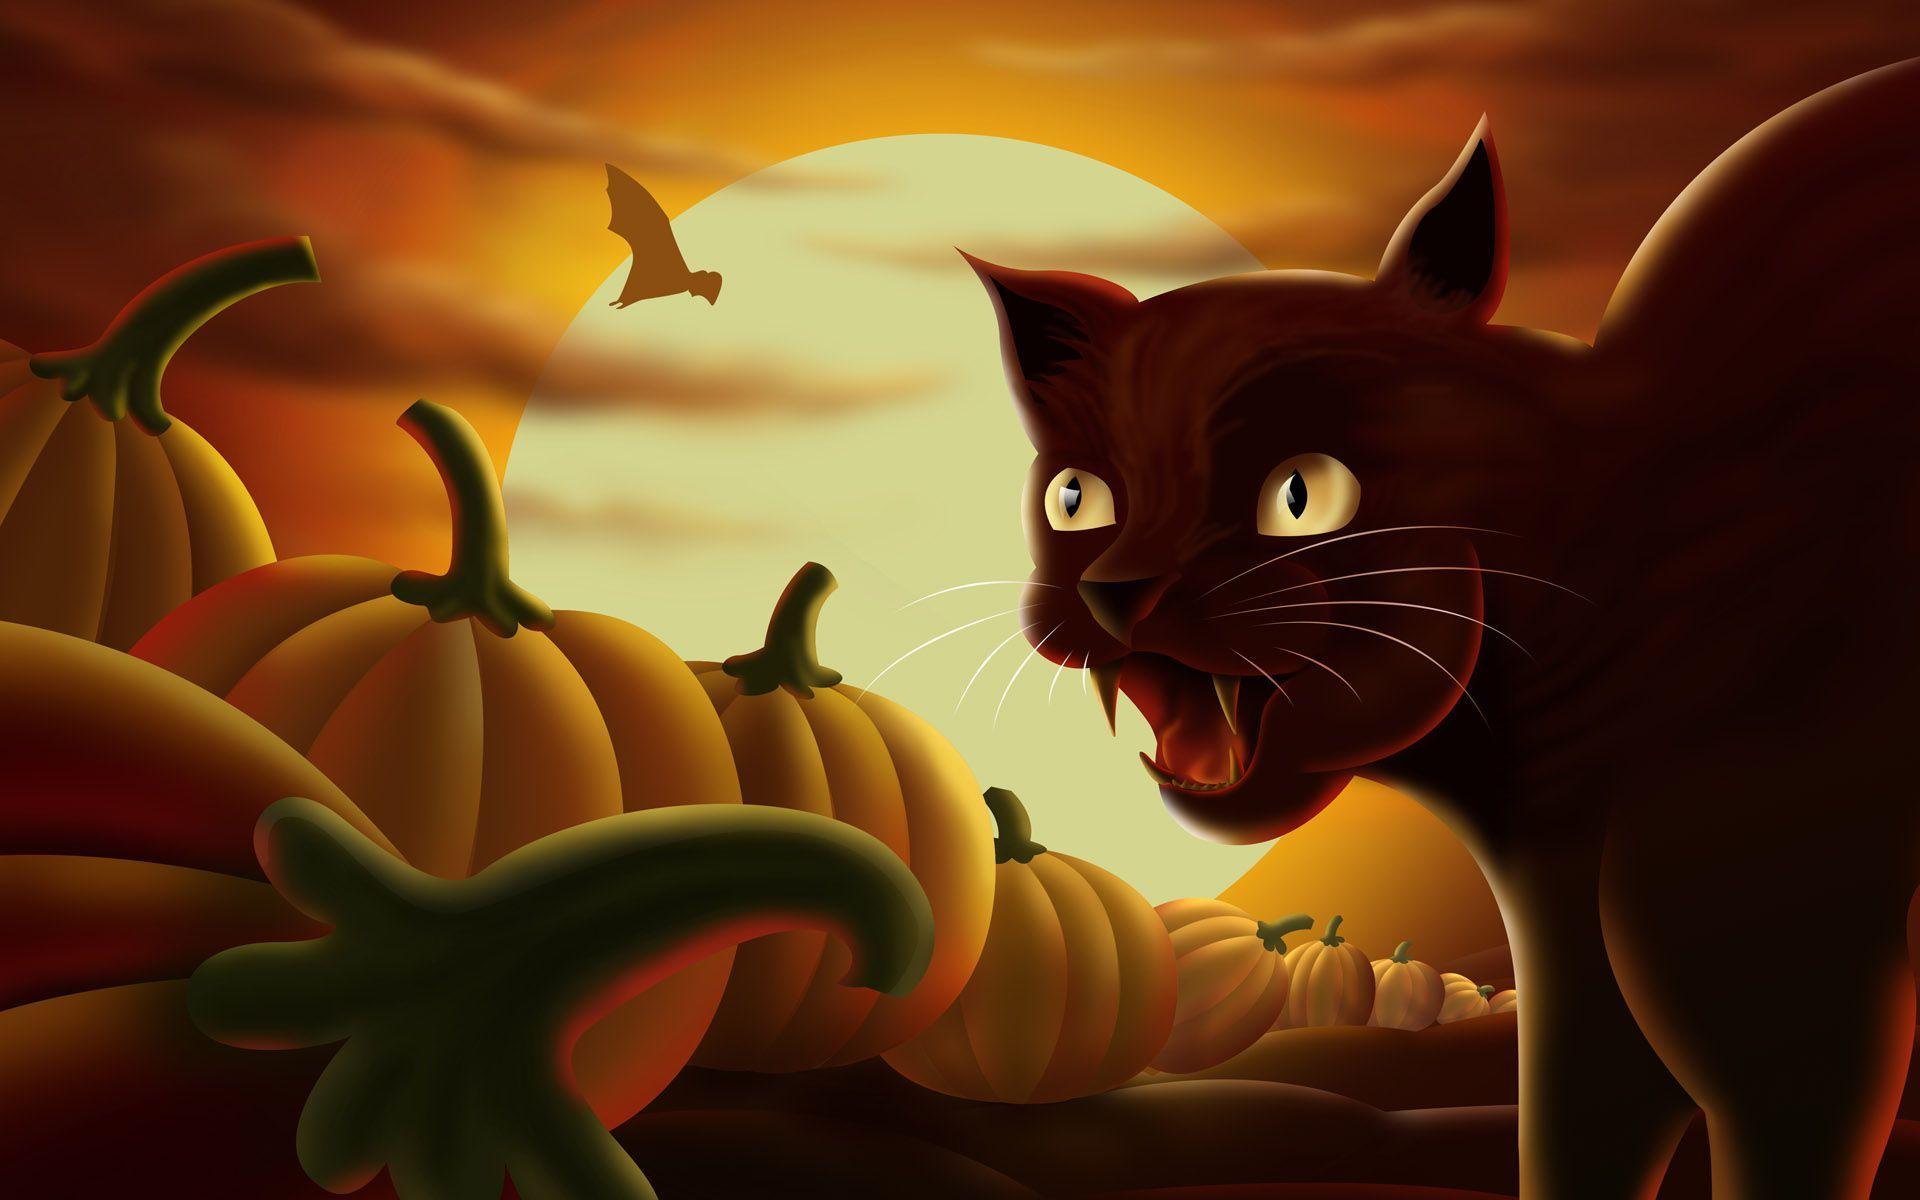 Spooky and Fun Halloween Wallpaper